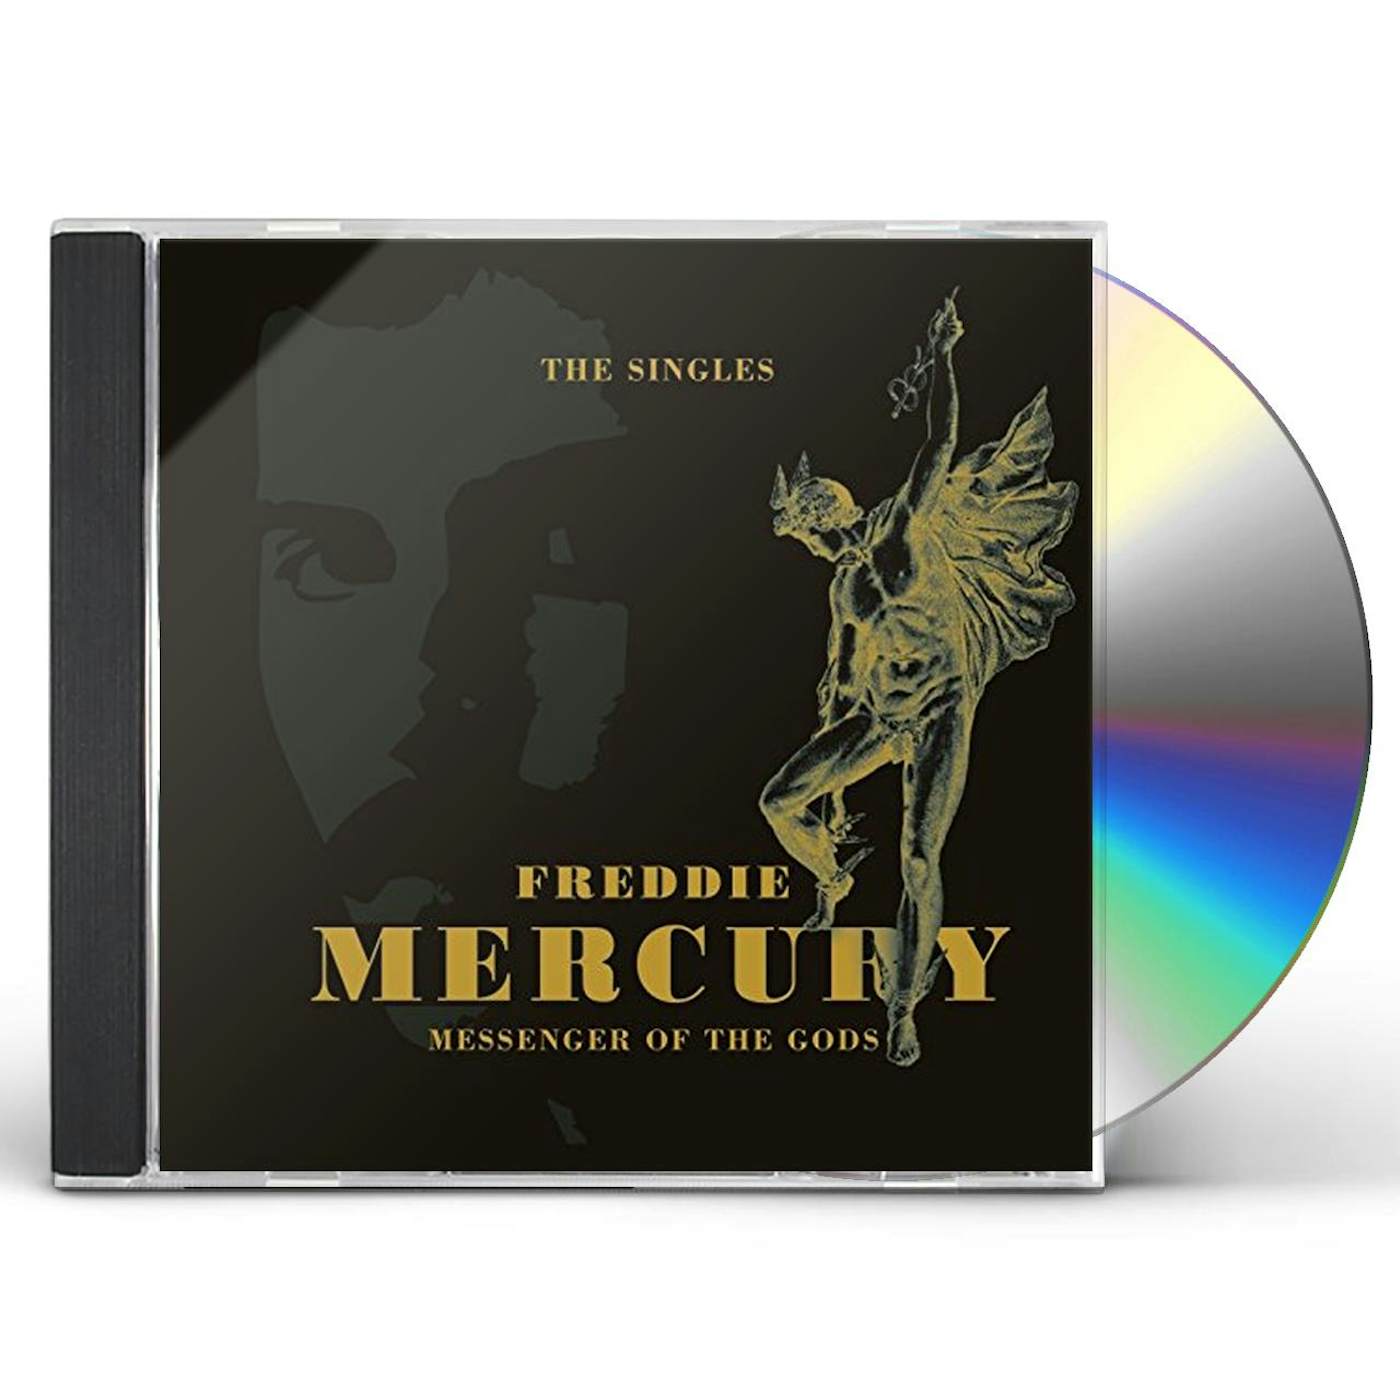 Freddie Mercury MESSENGER OF THE GODS: THE SINGLES (SHM) CD